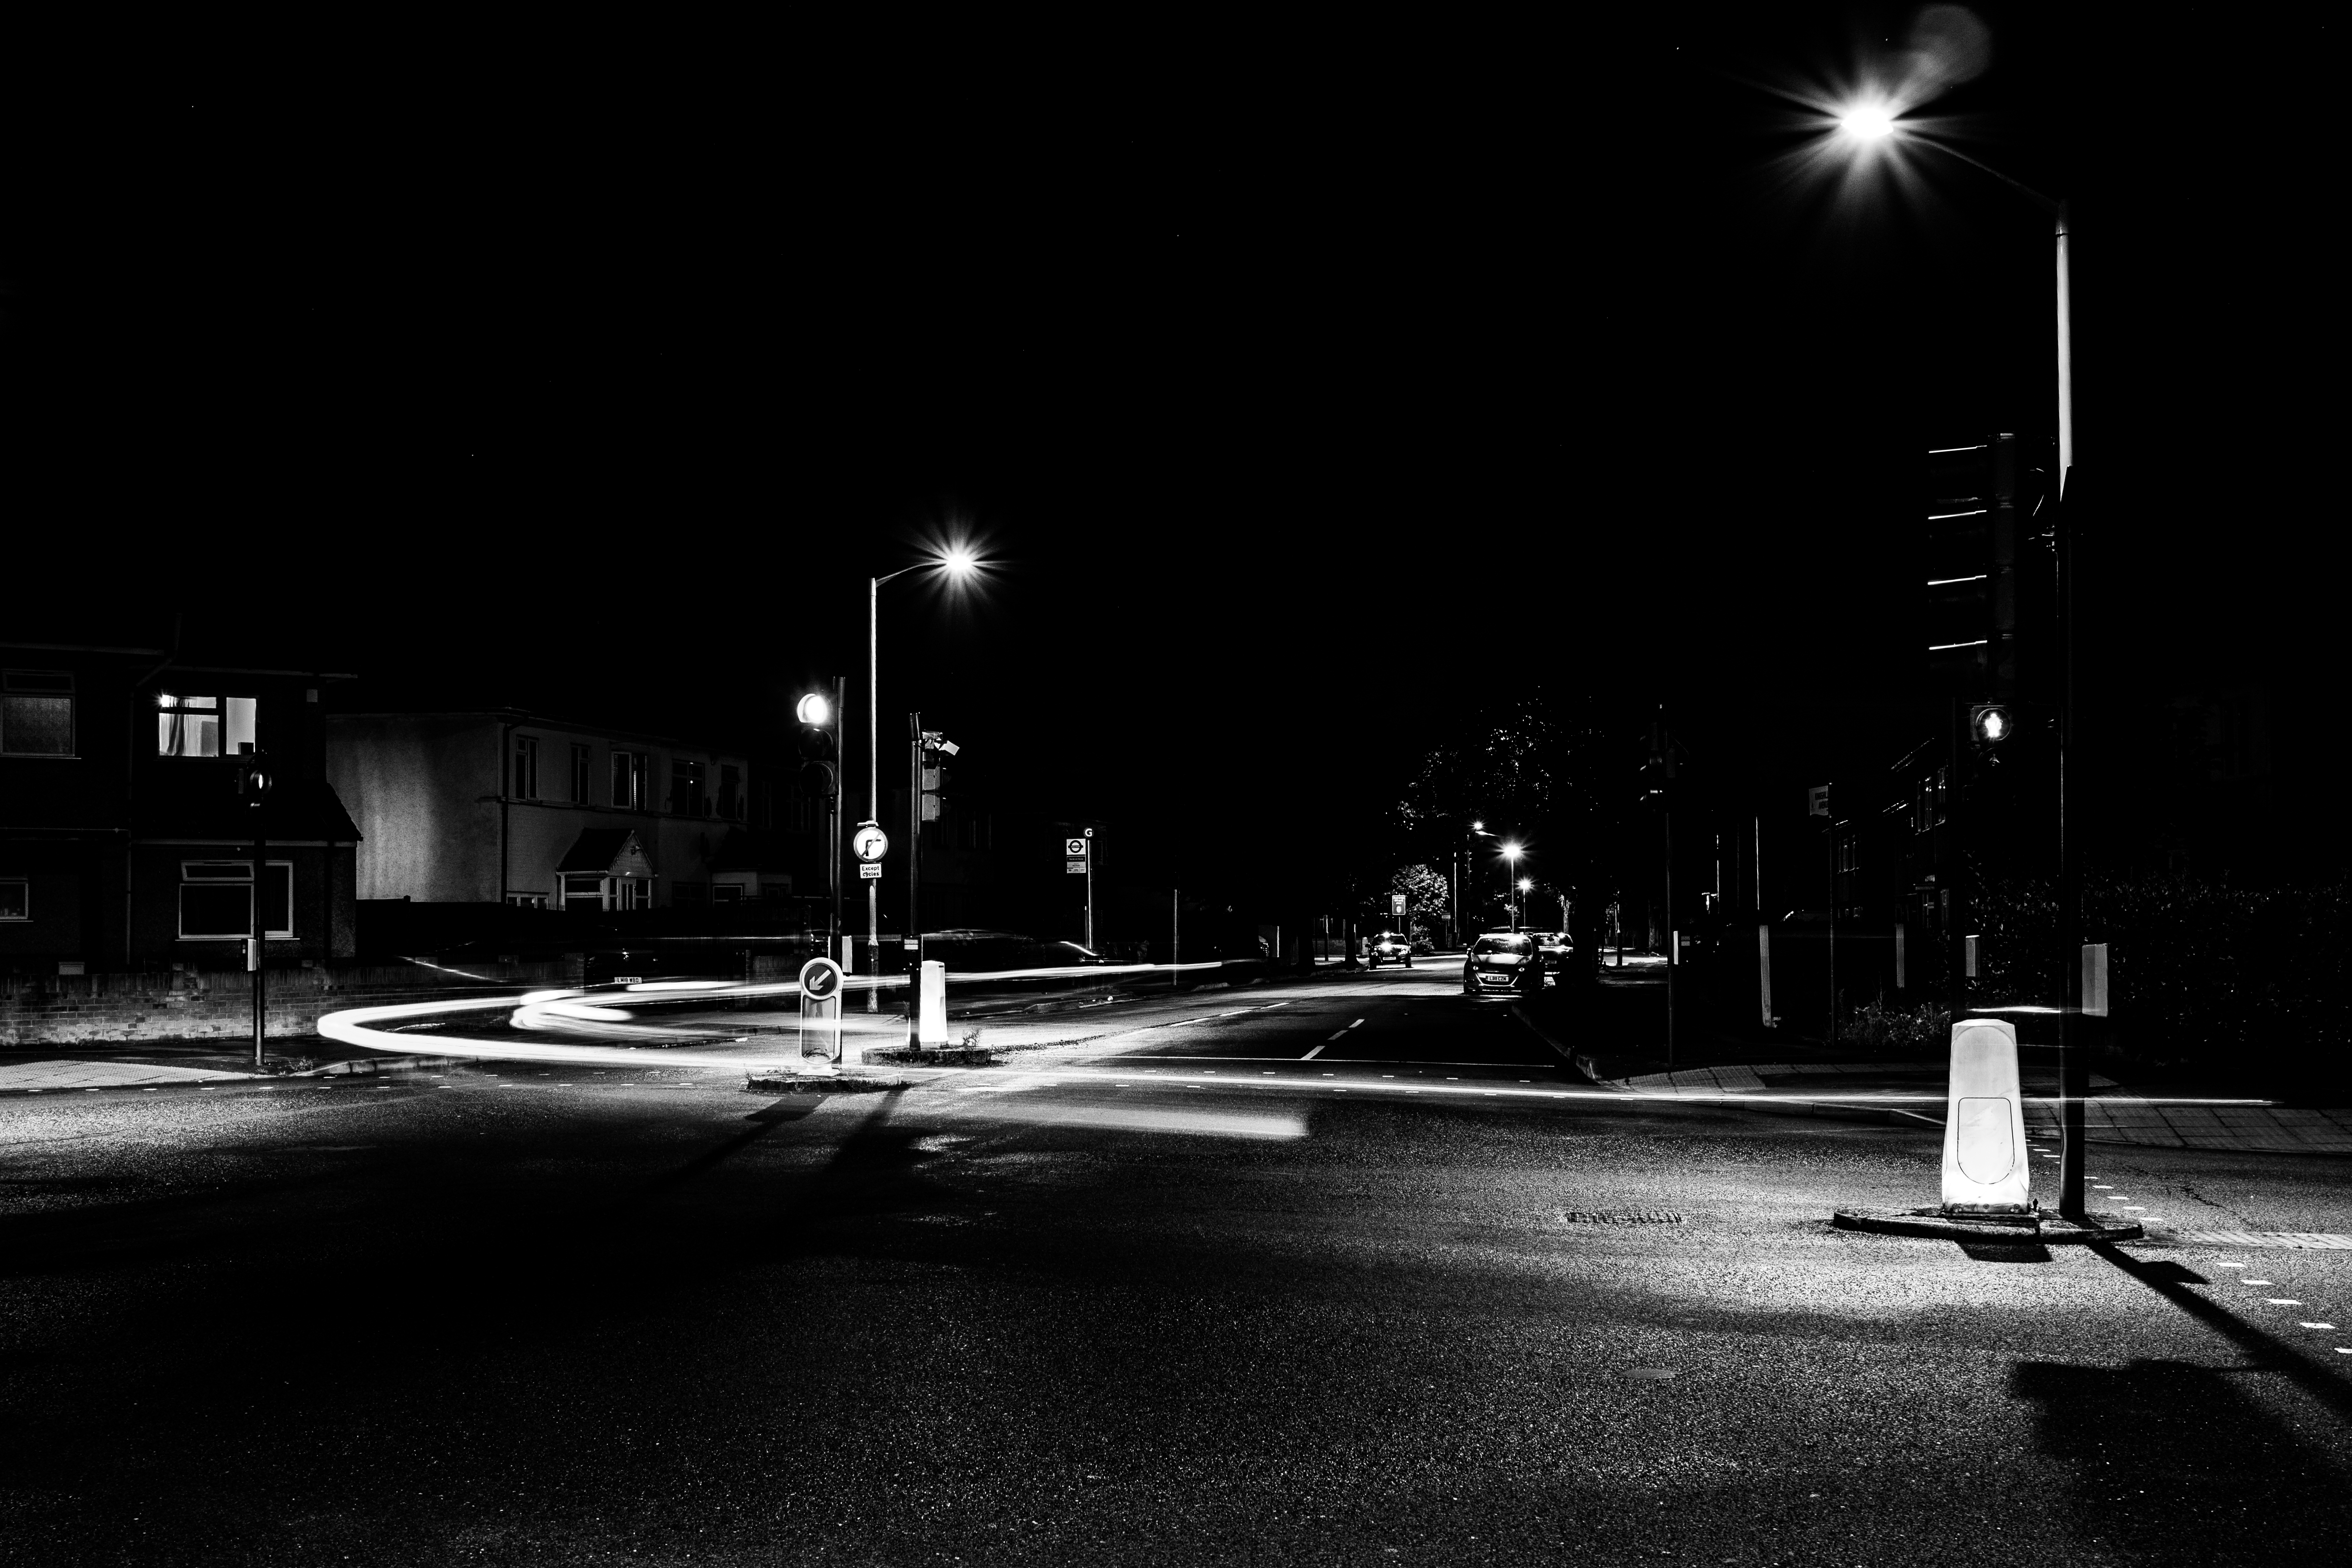 General 4859x3239 night Canon dark London street light monochrome street car vehicle signs